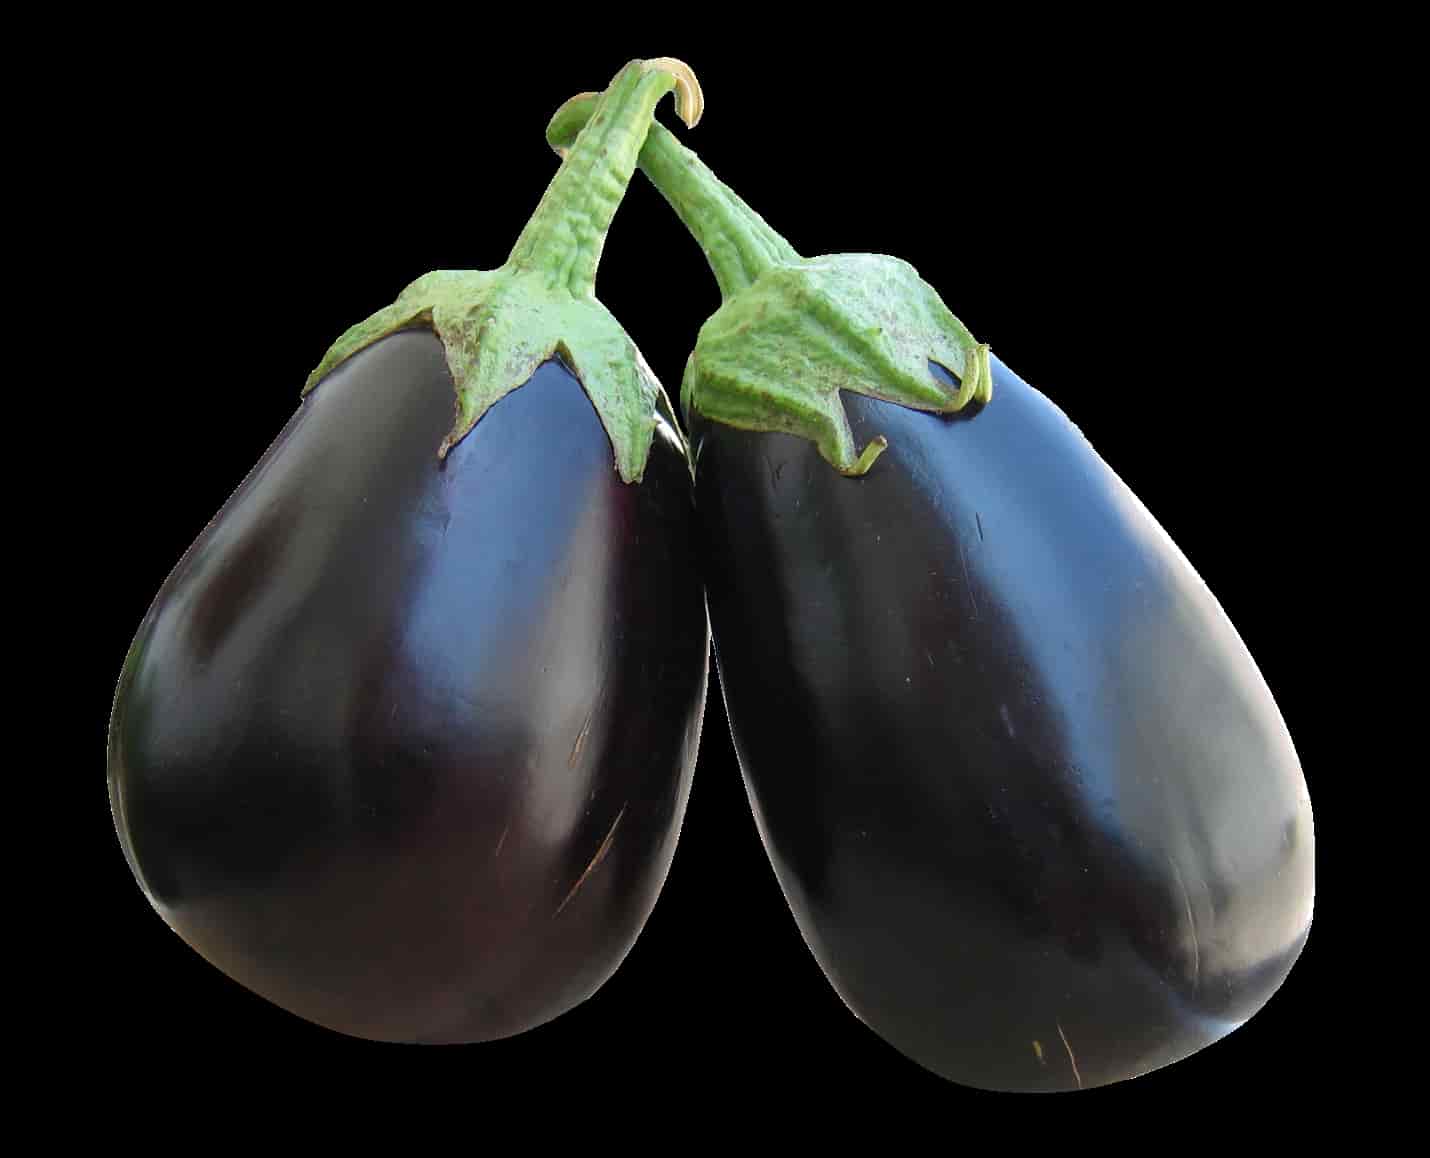 eggplant-picture-download-1